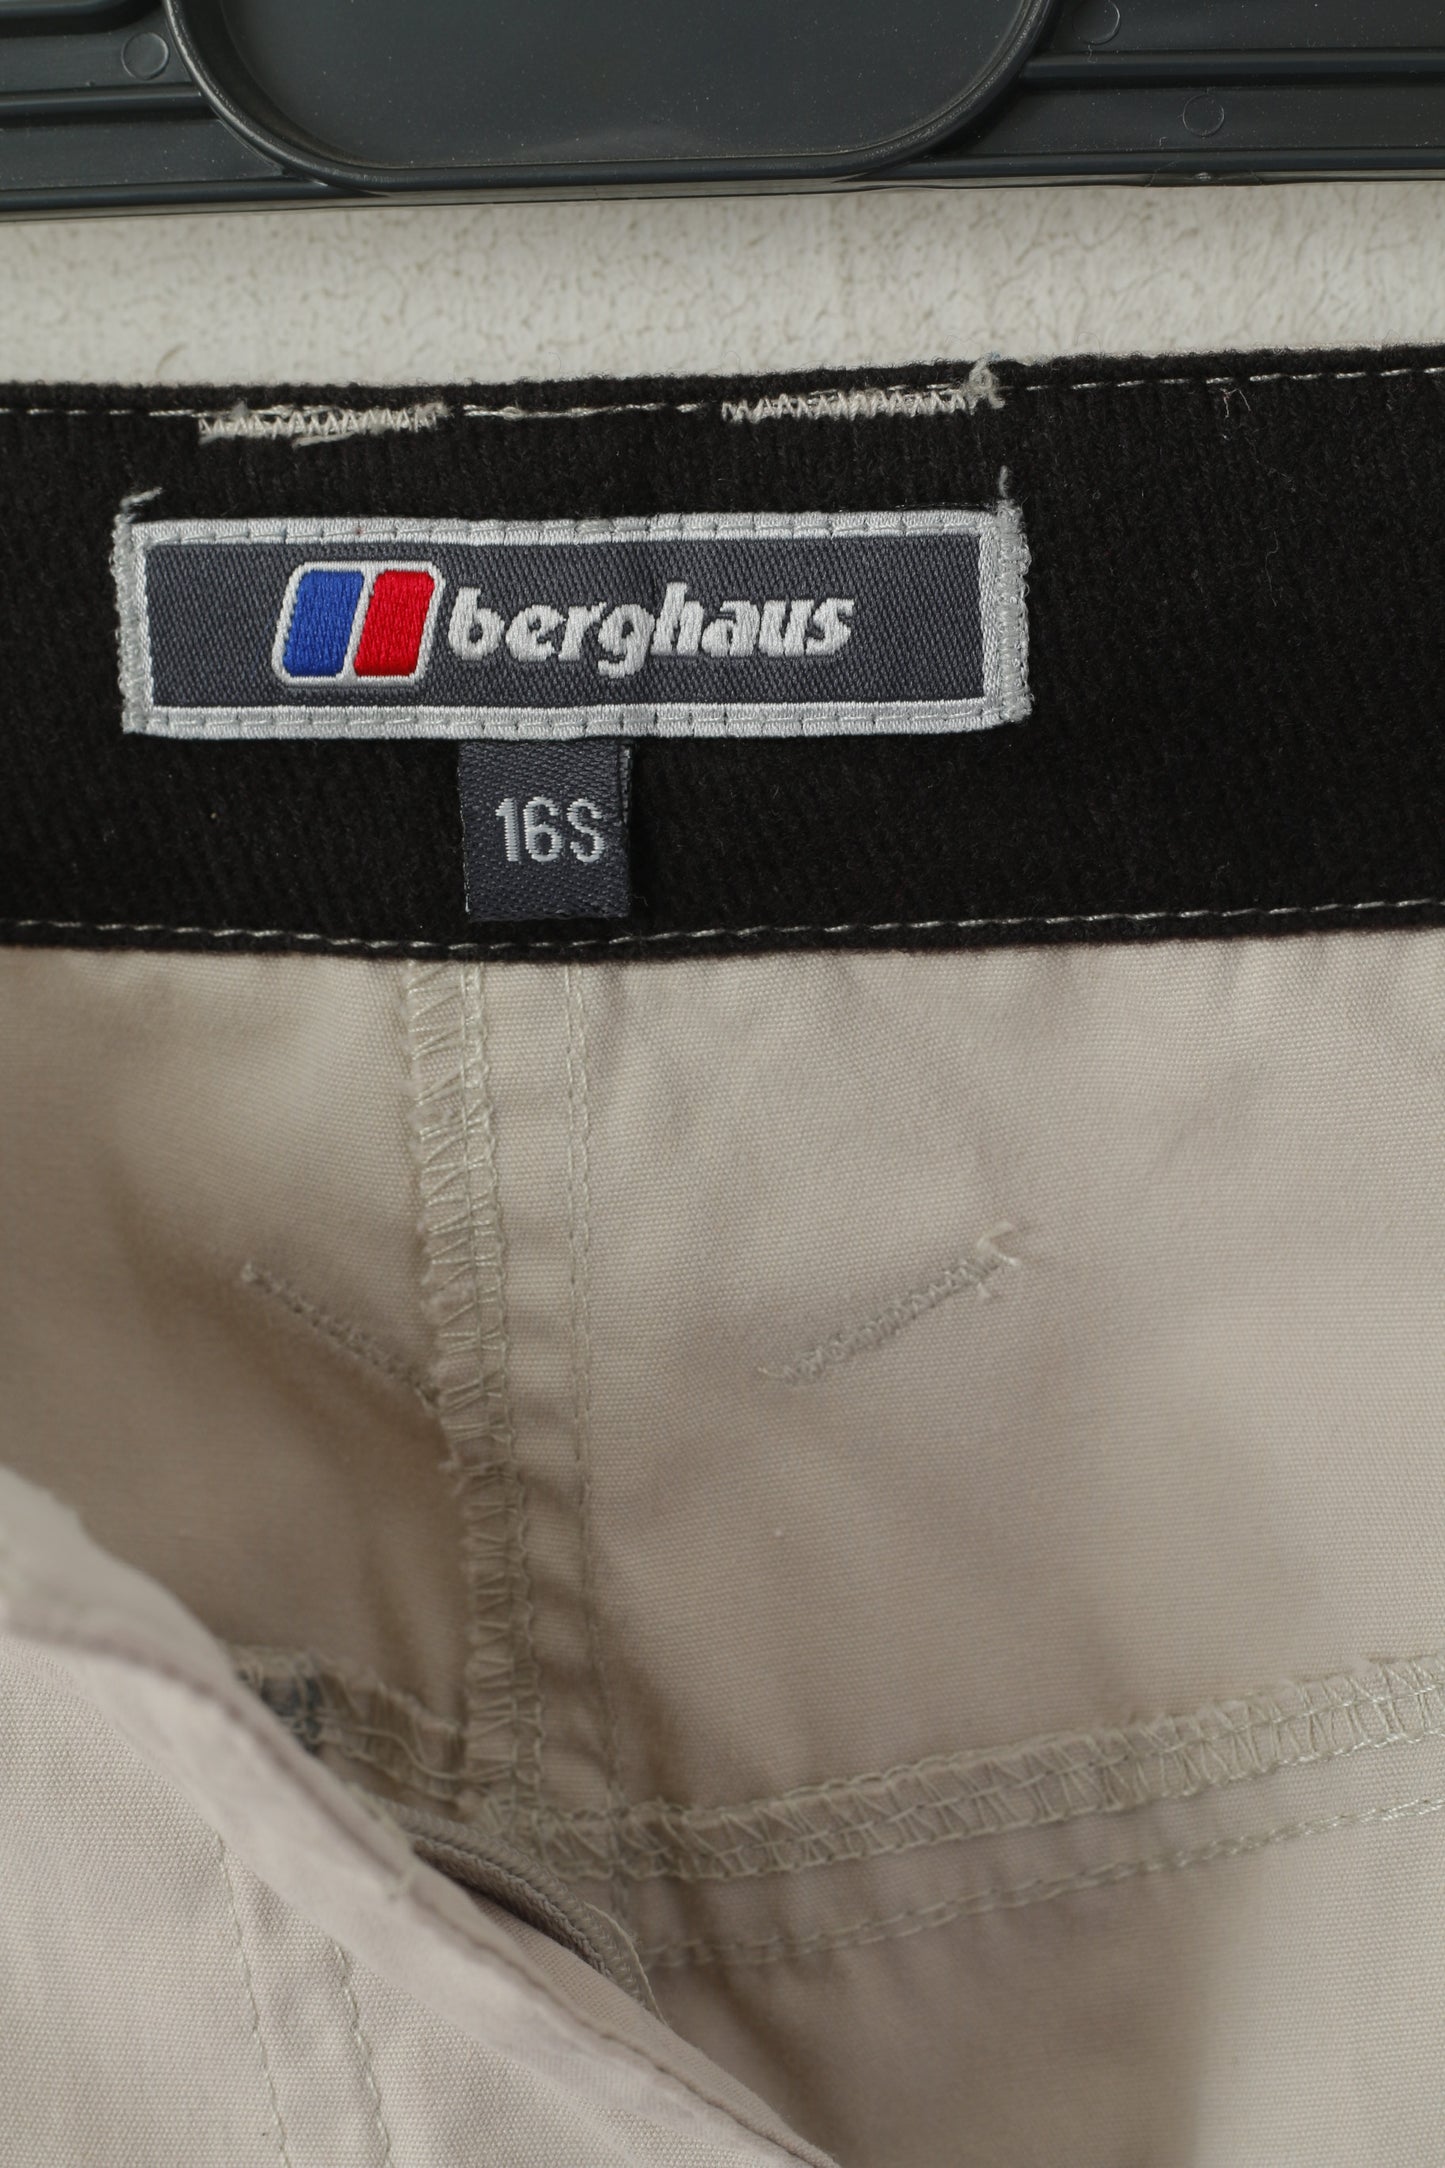 Berghaus Women 16 Trousers Beige Cotton Outdoor Combat Hiking Activewear Pants